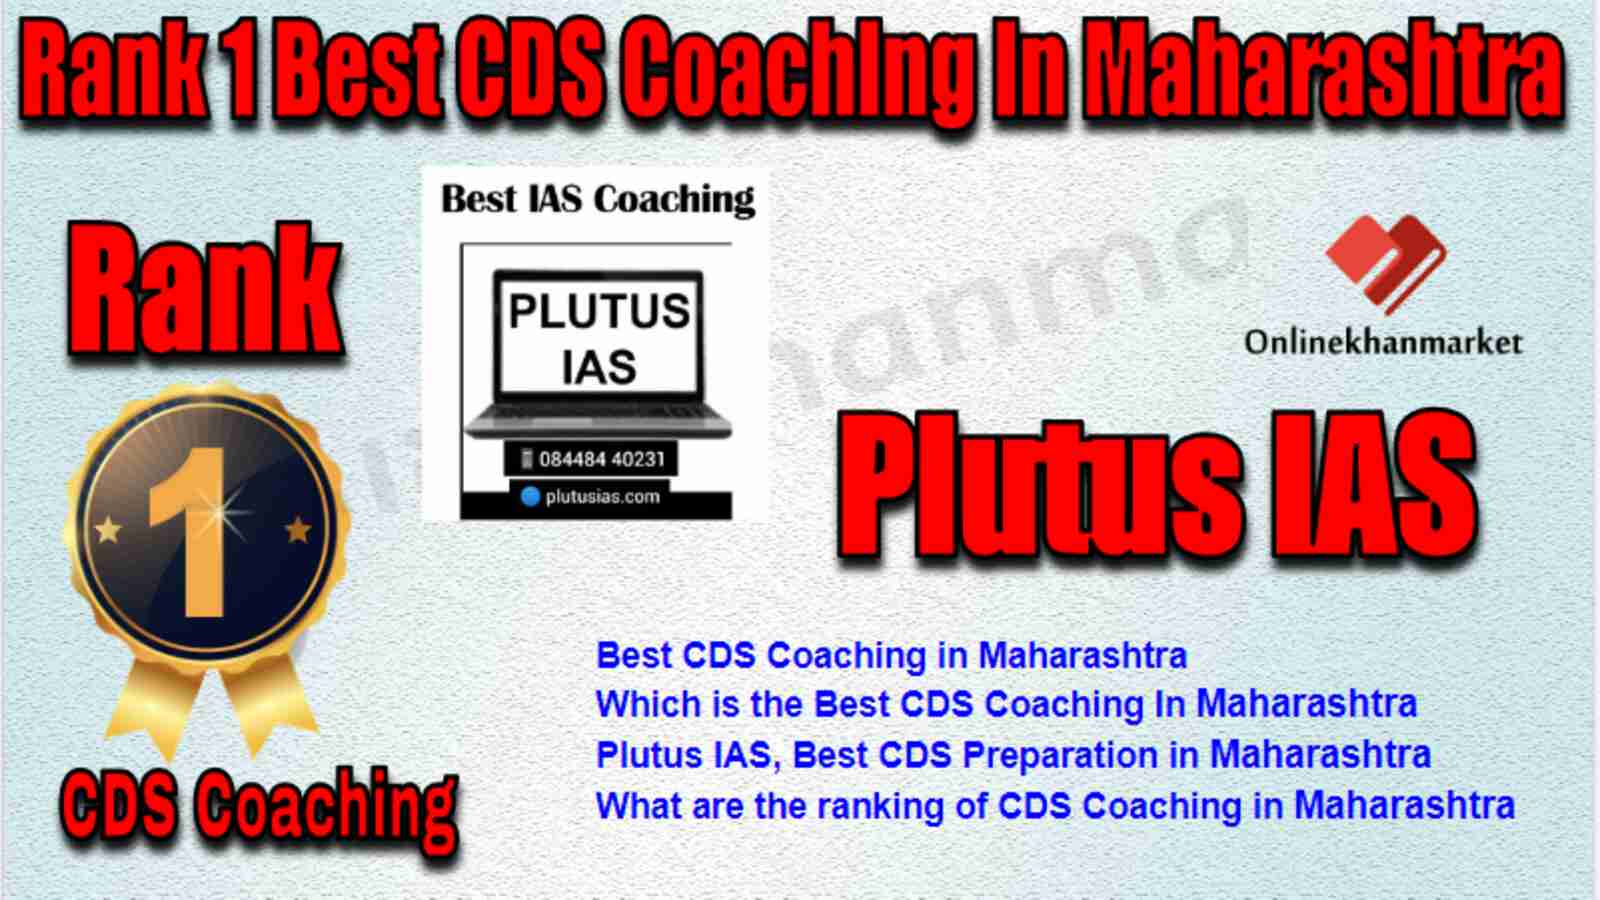 Rank 1 Best CDS Coaching in Maharashtra